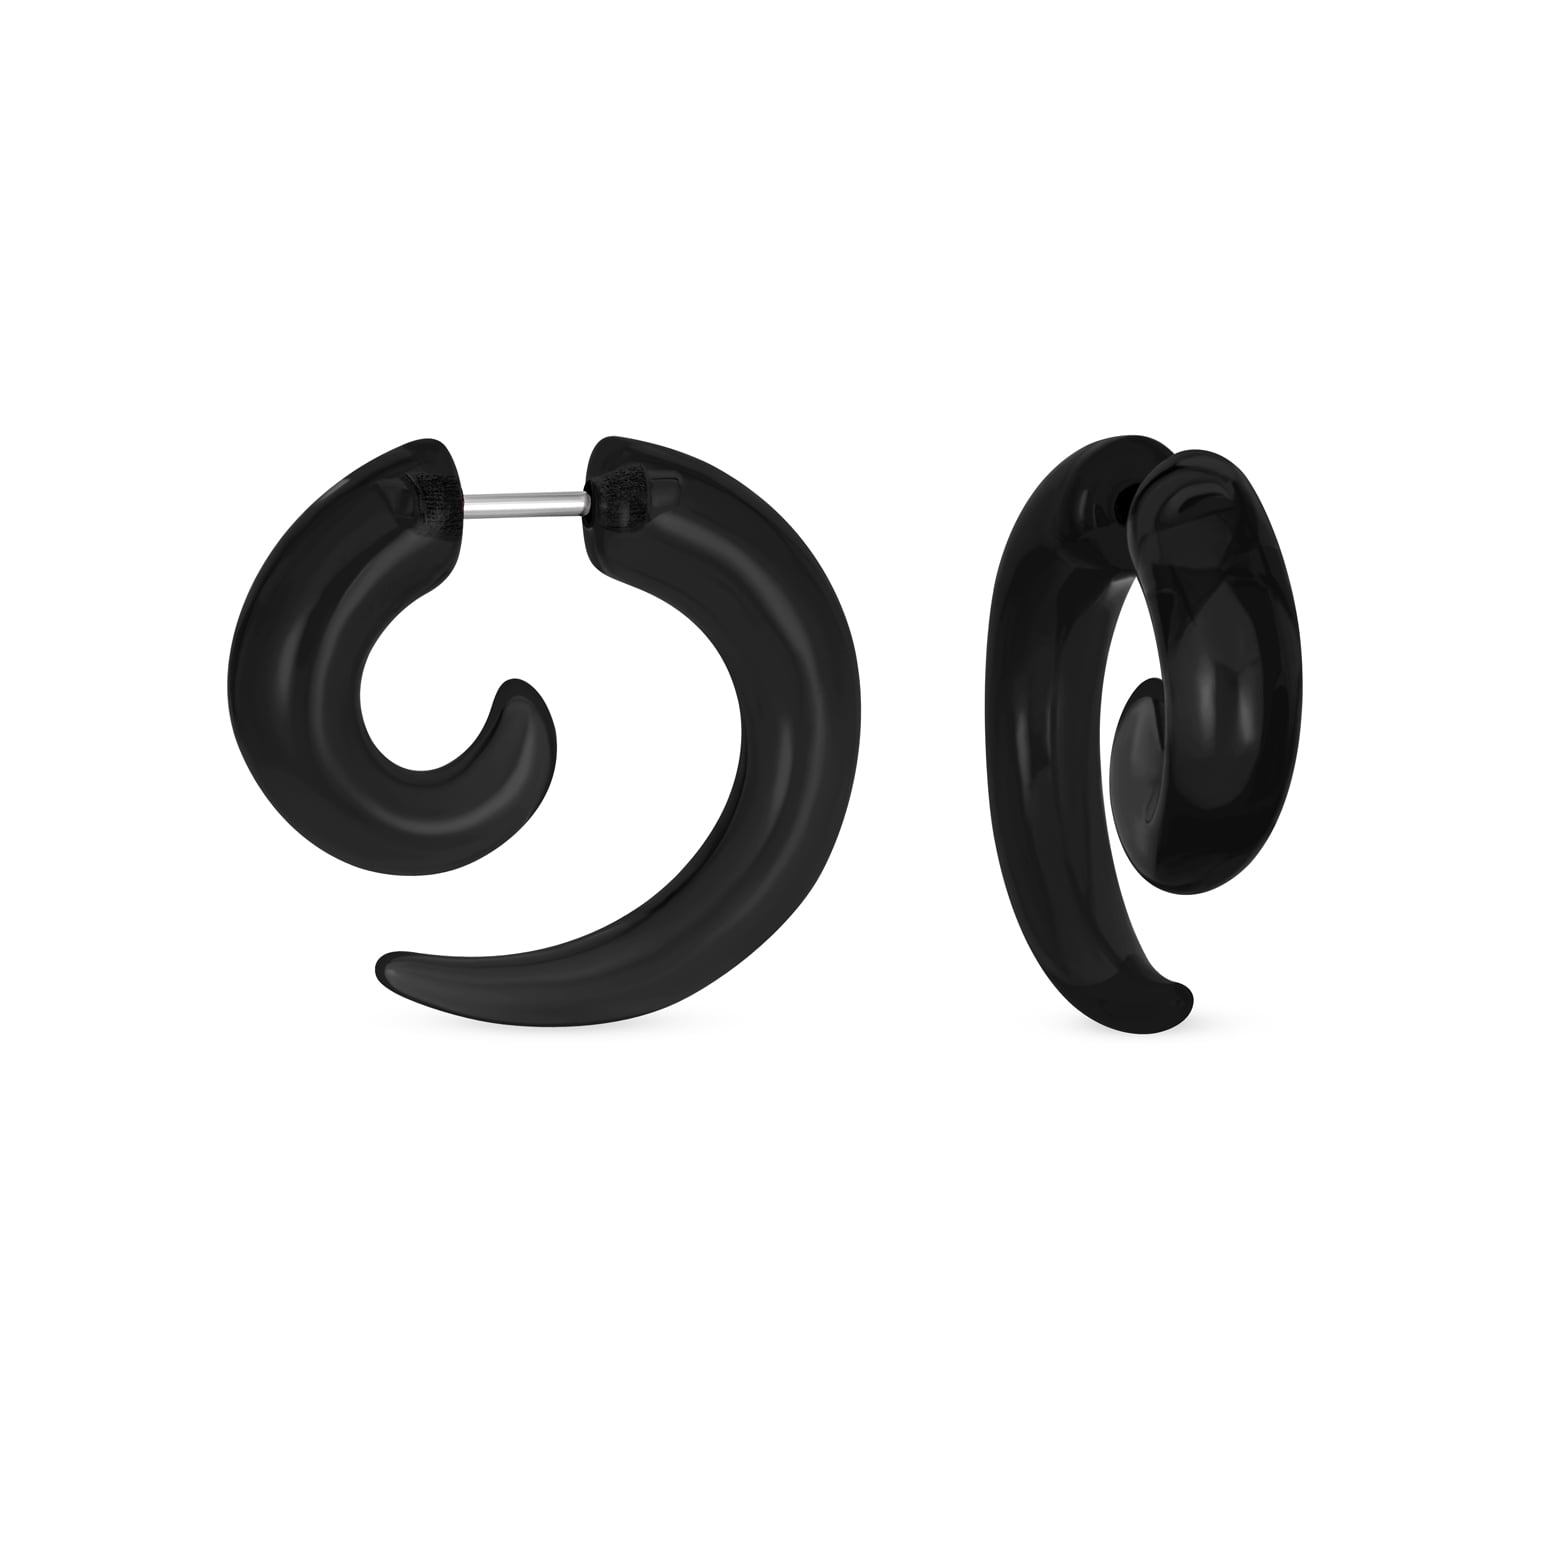 Covet Jewelry Devious Steel Fang Ear Gauge Spiral Hanging Taper